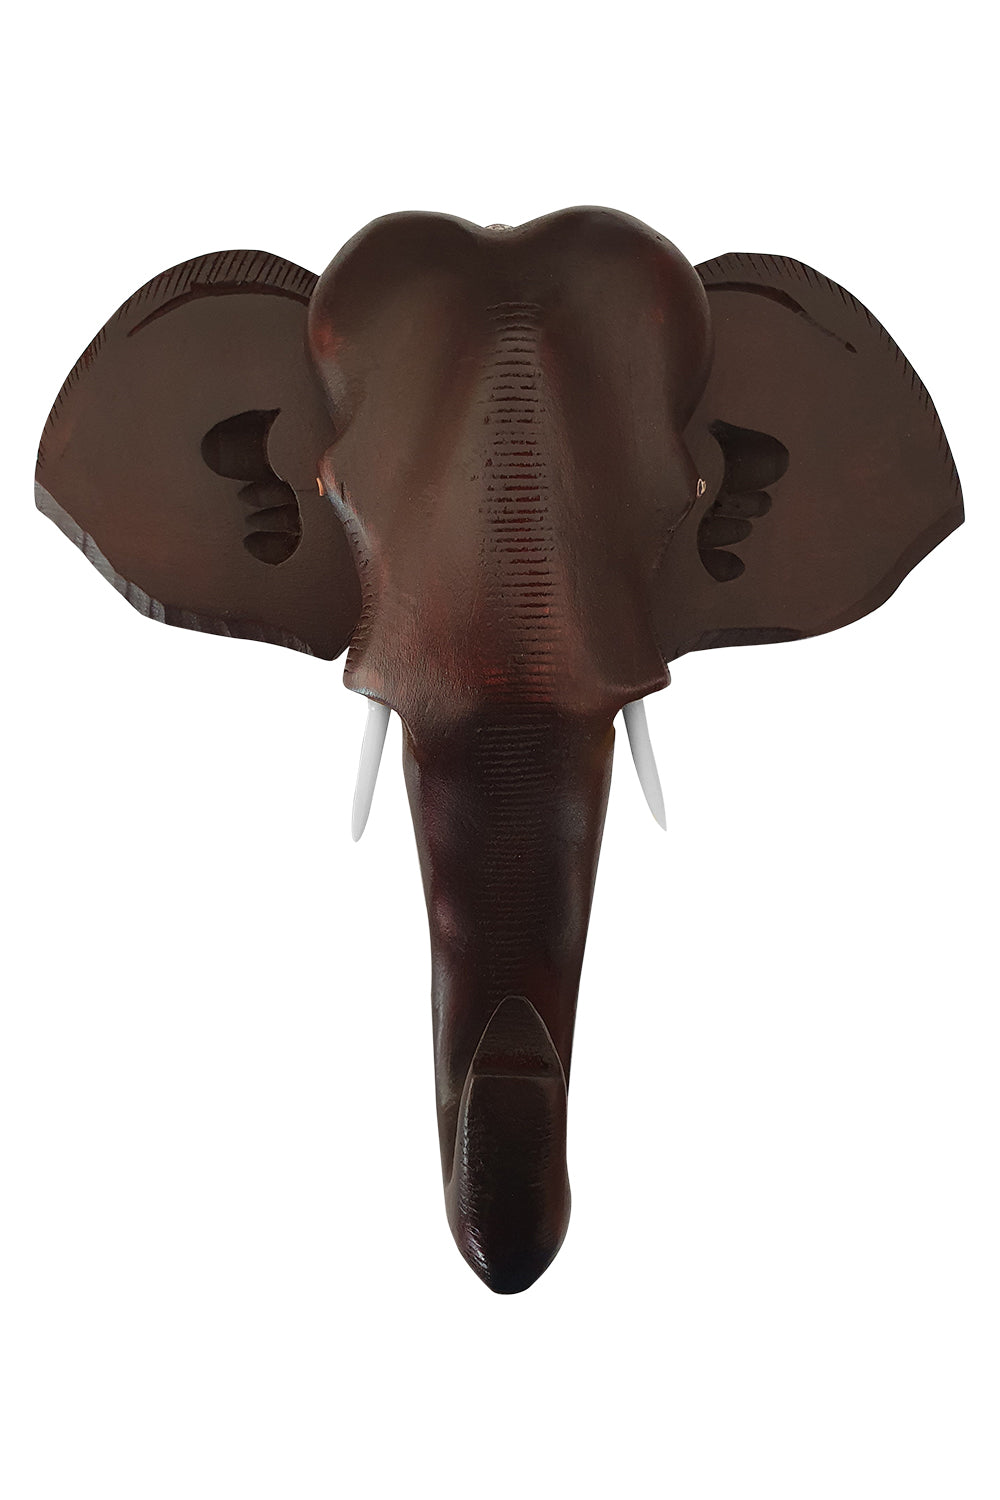 Southloom Handmade Elephant Head Handicraft (Carved from Mahogany Wood) 10 Inches